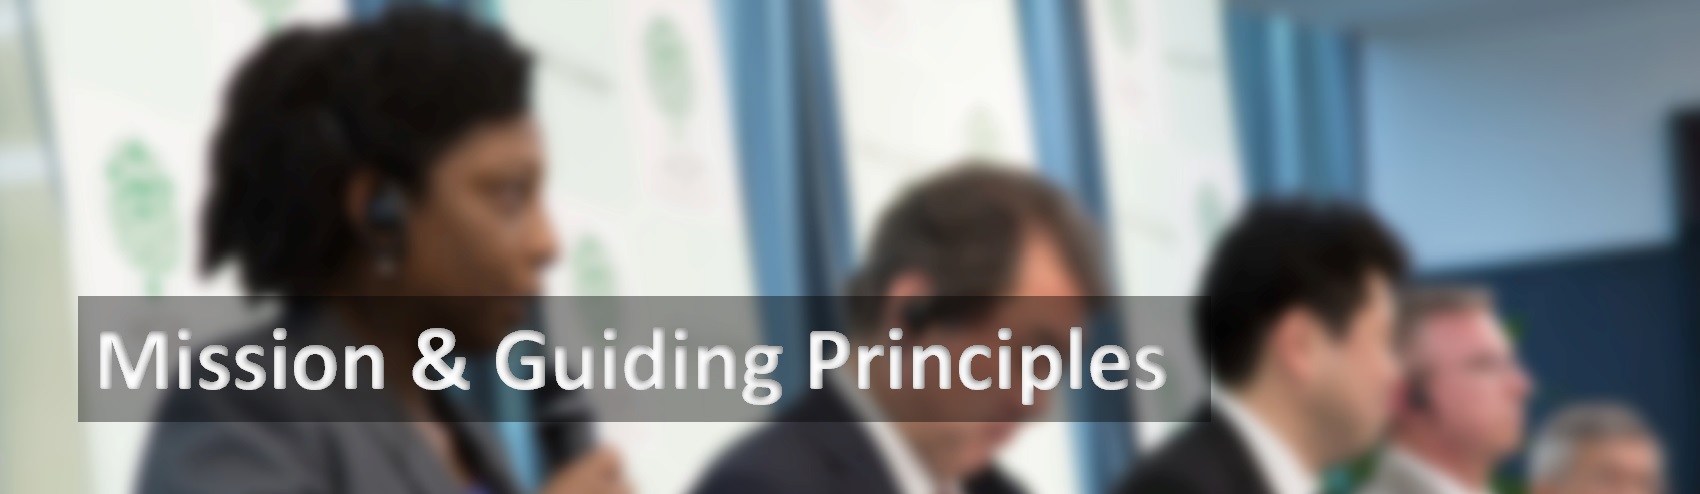 Mission & Guiding Principles